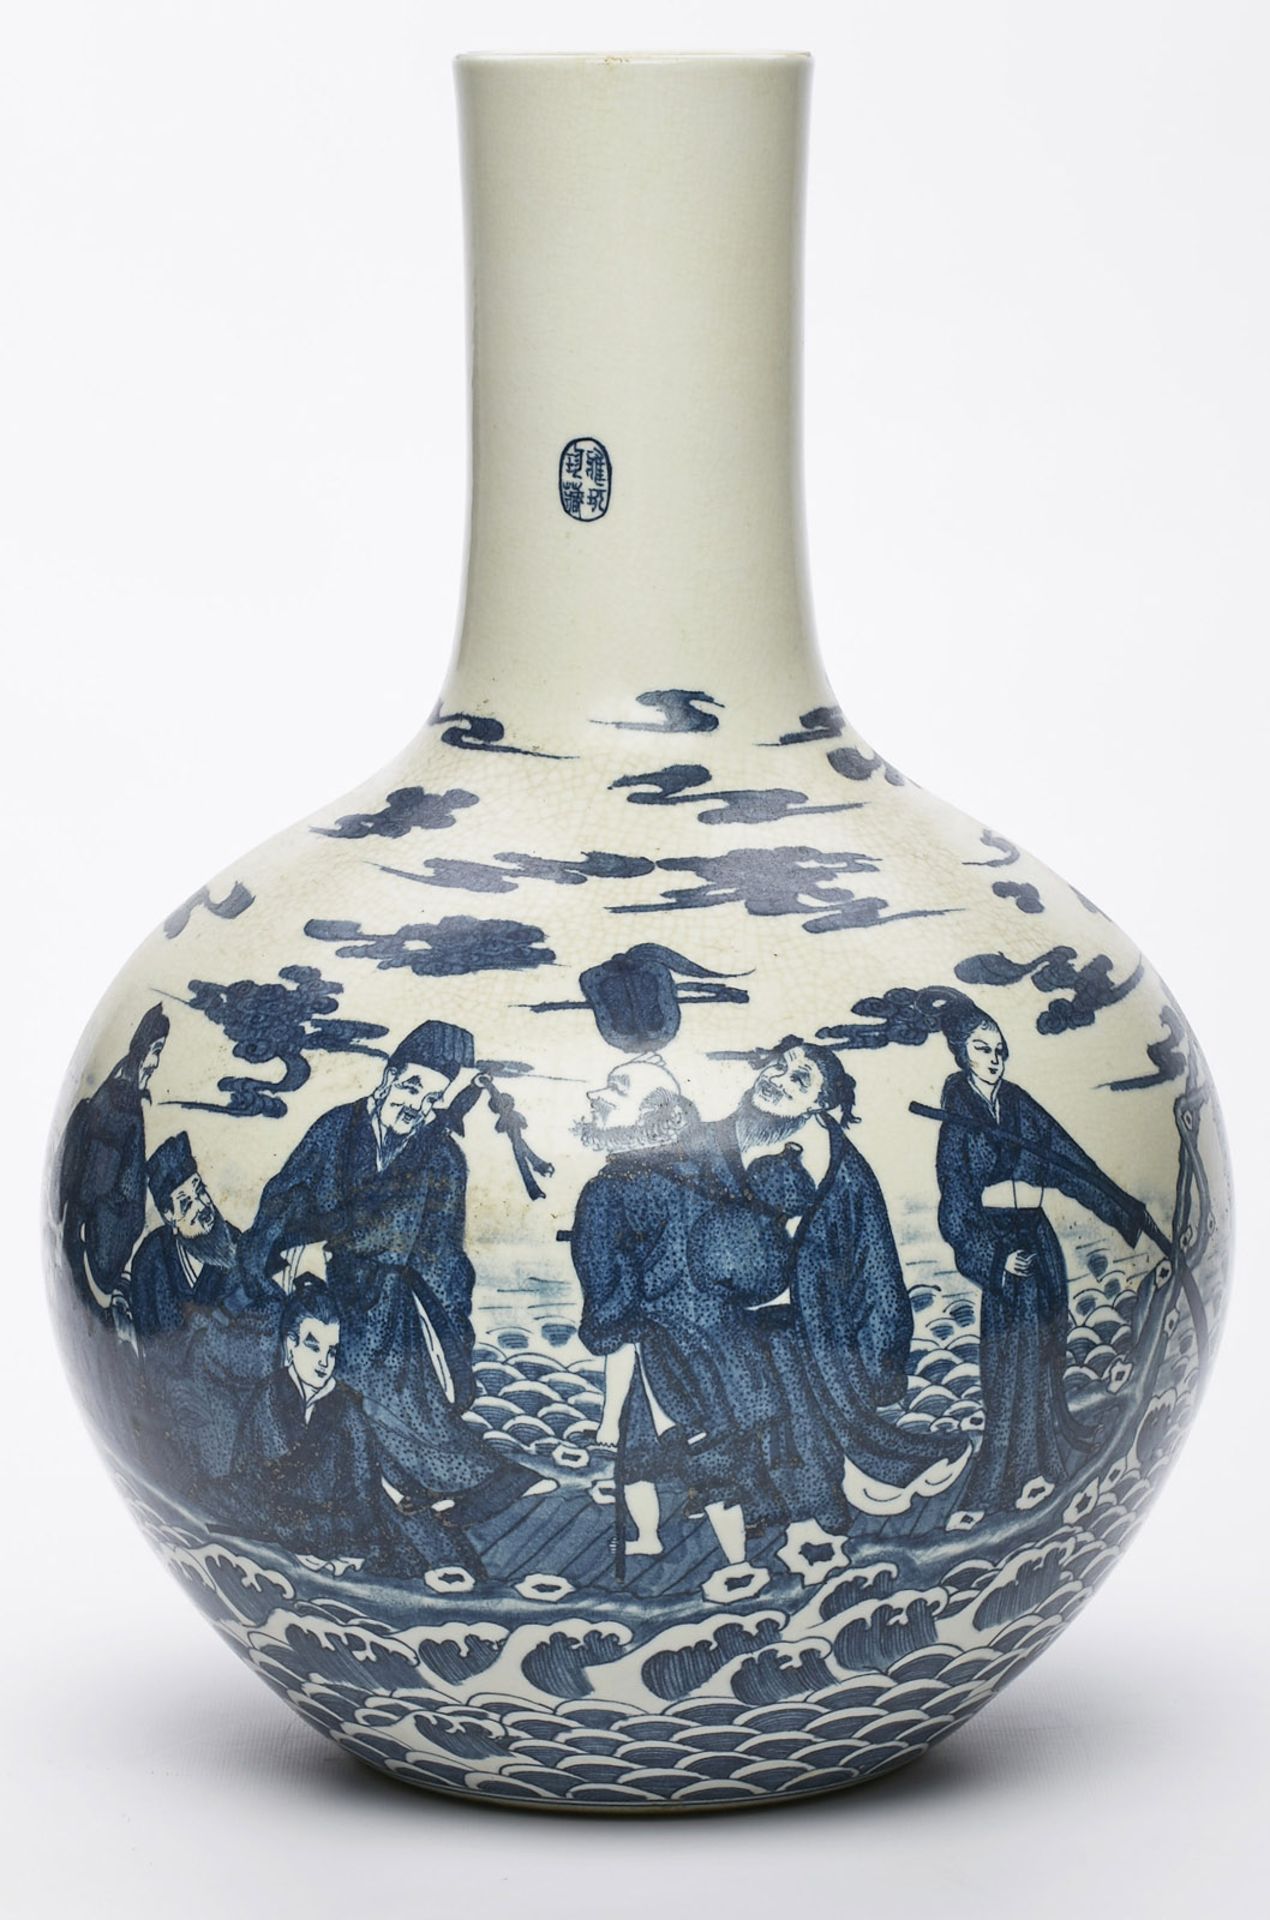 gr. bauchige Vase China wohl um 1850,